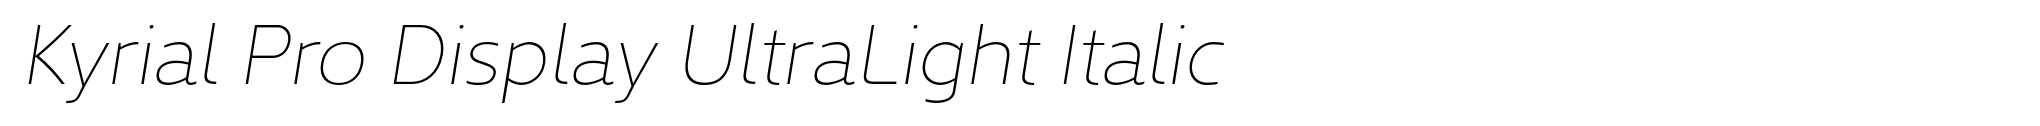 Kyrial Pro Display UltraLight Italic image